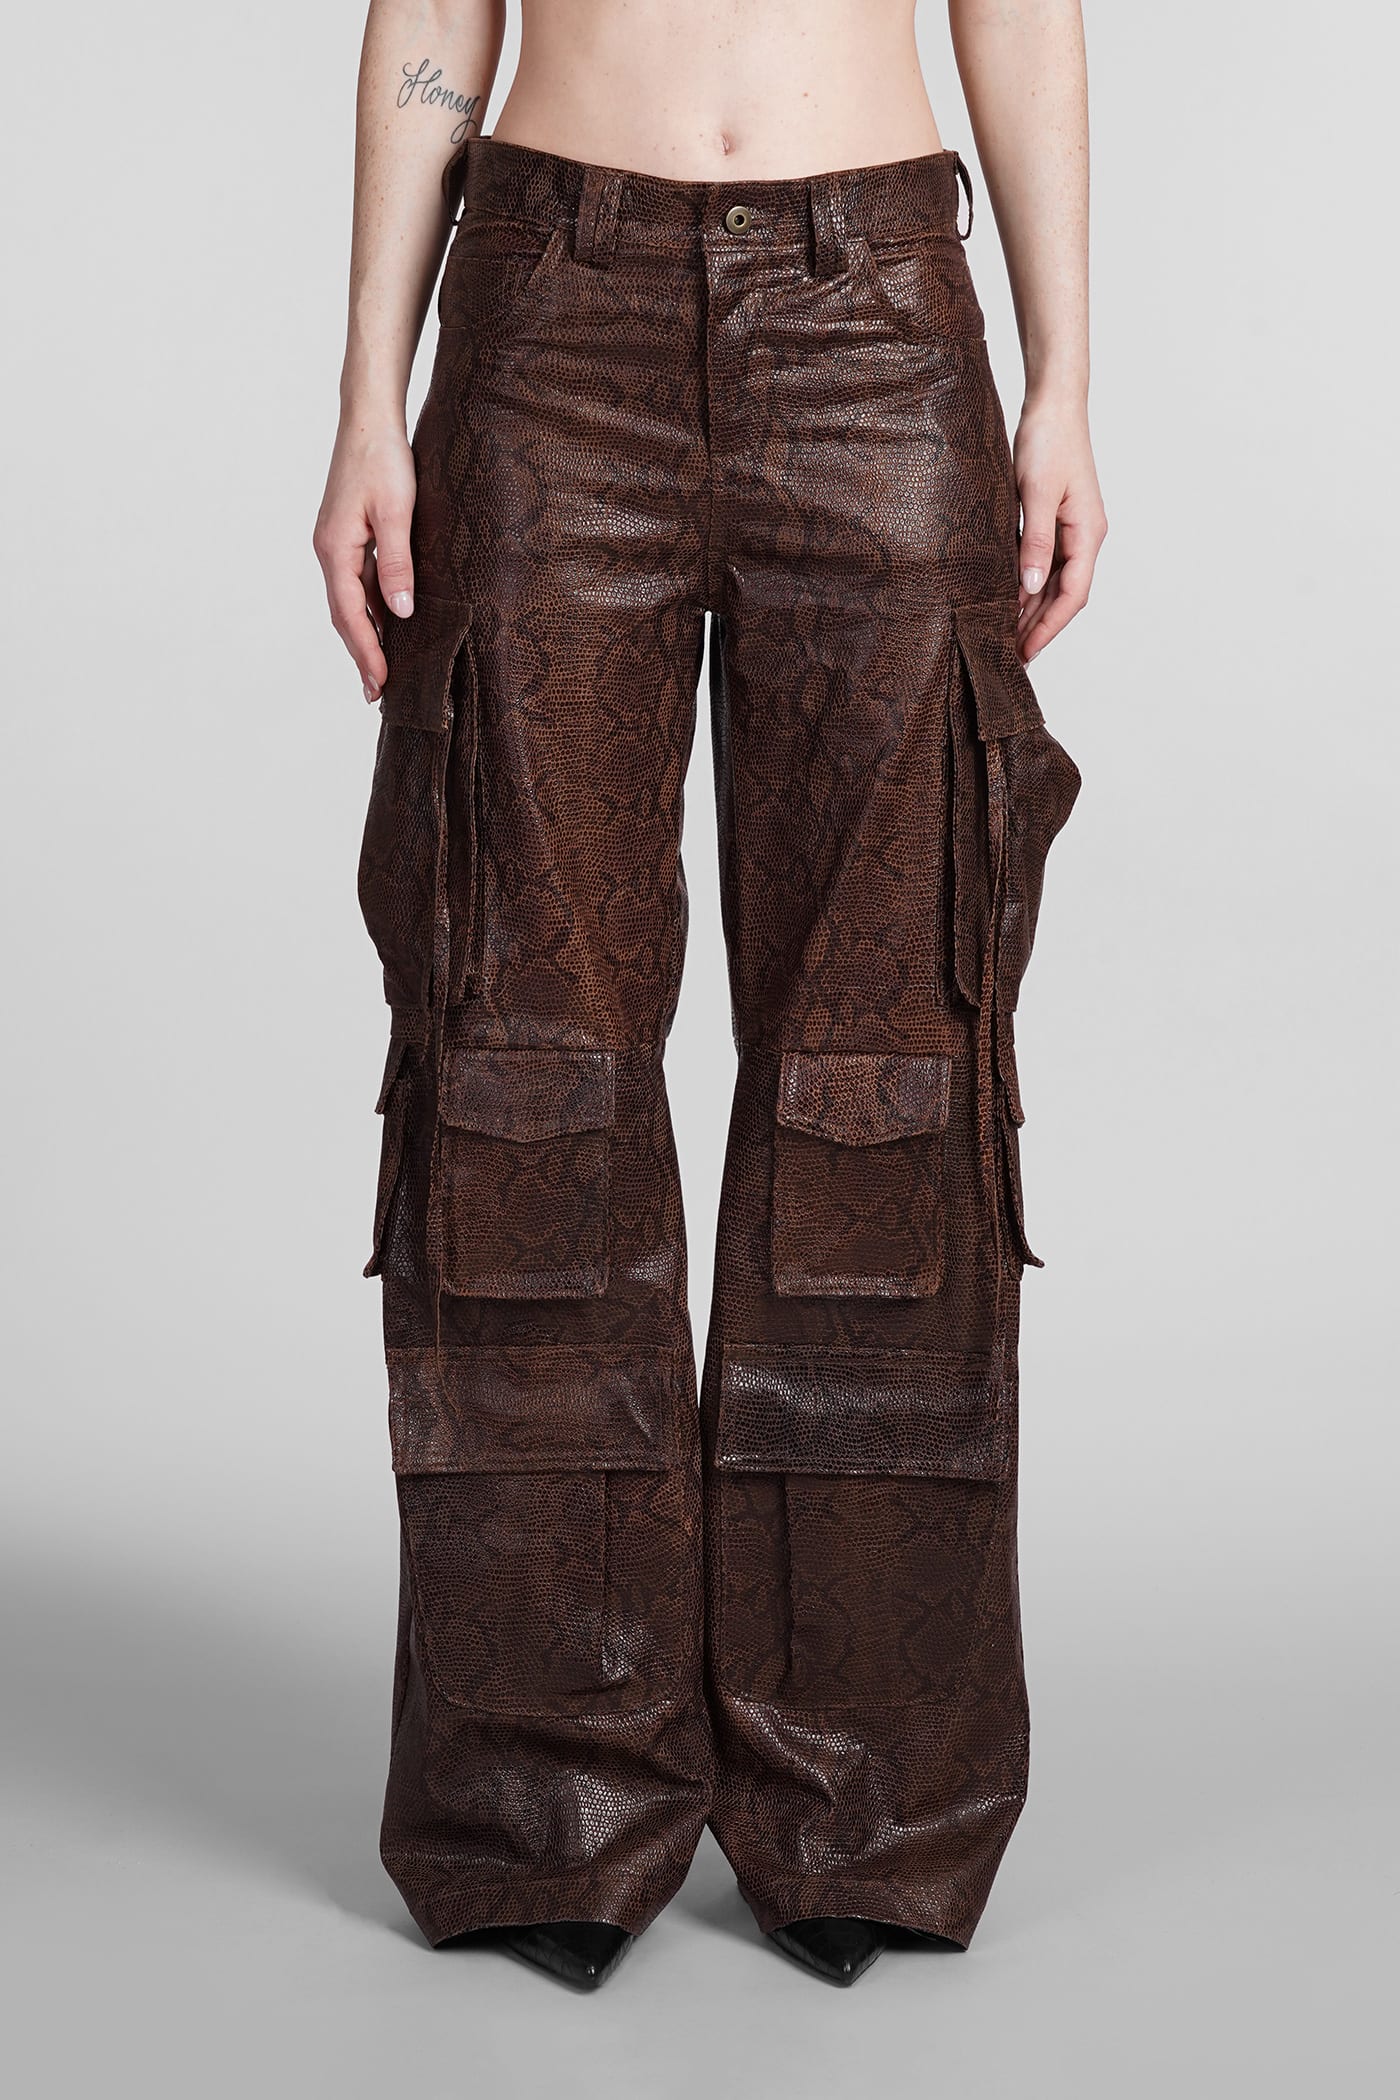 Salvatore Santoro Trousers In Brown Leather